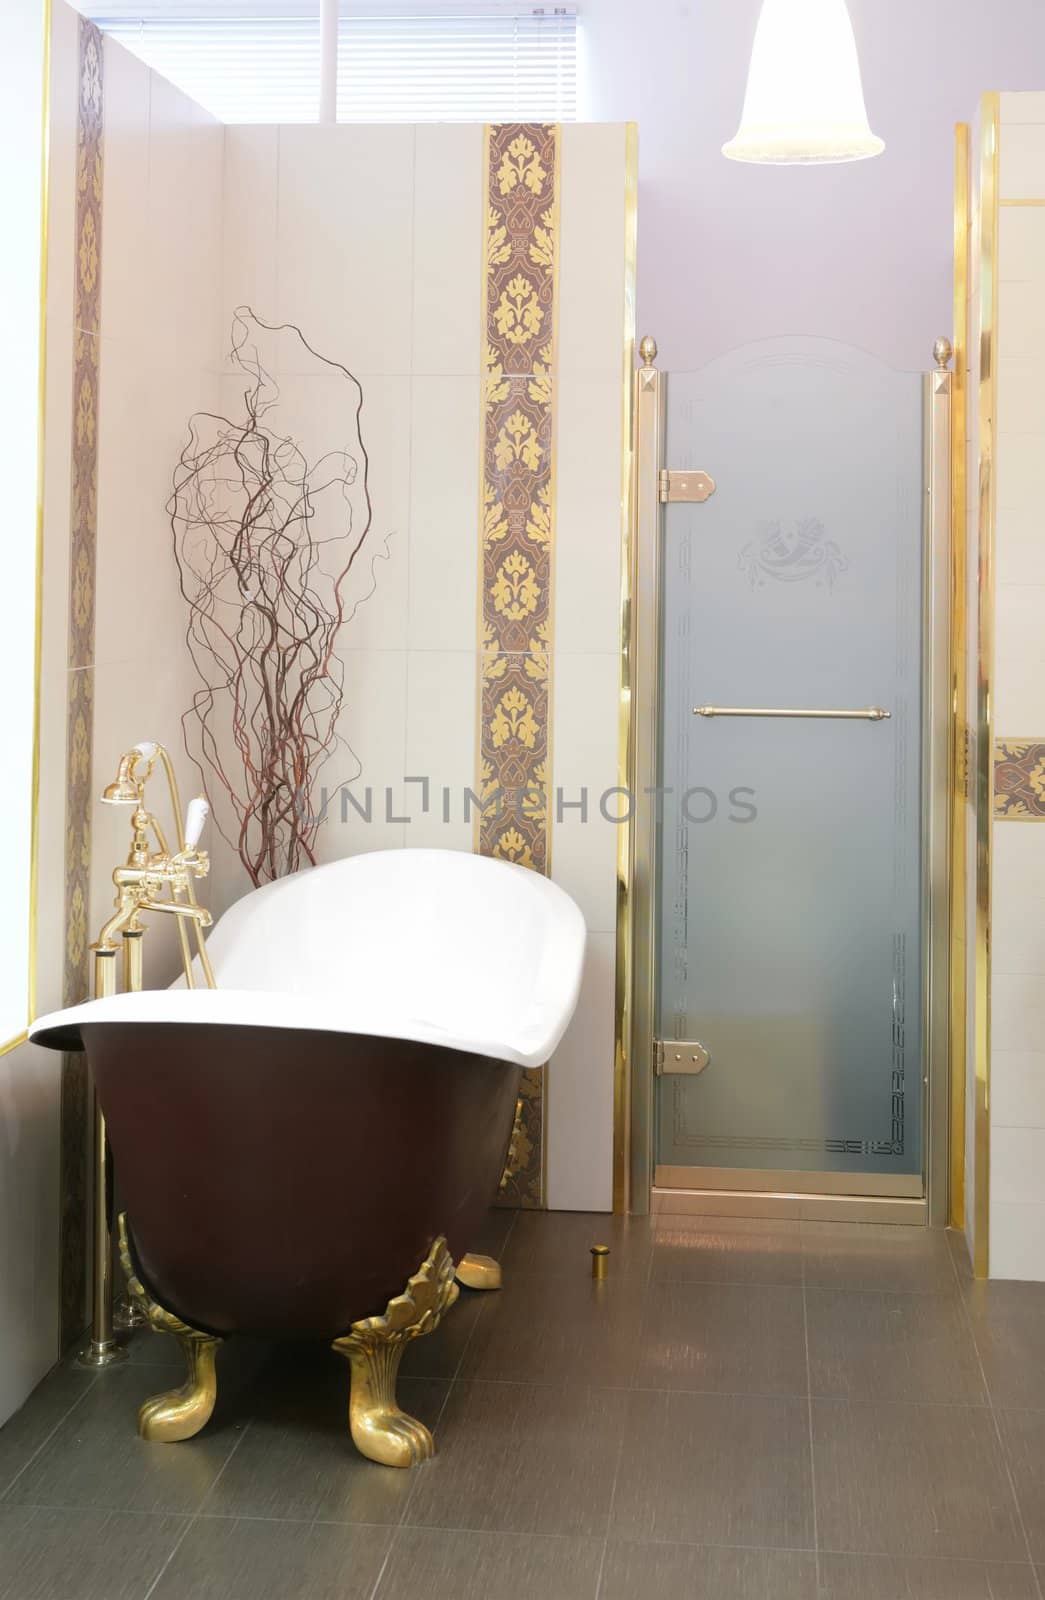 interior of the luxurious bathroom with glass door